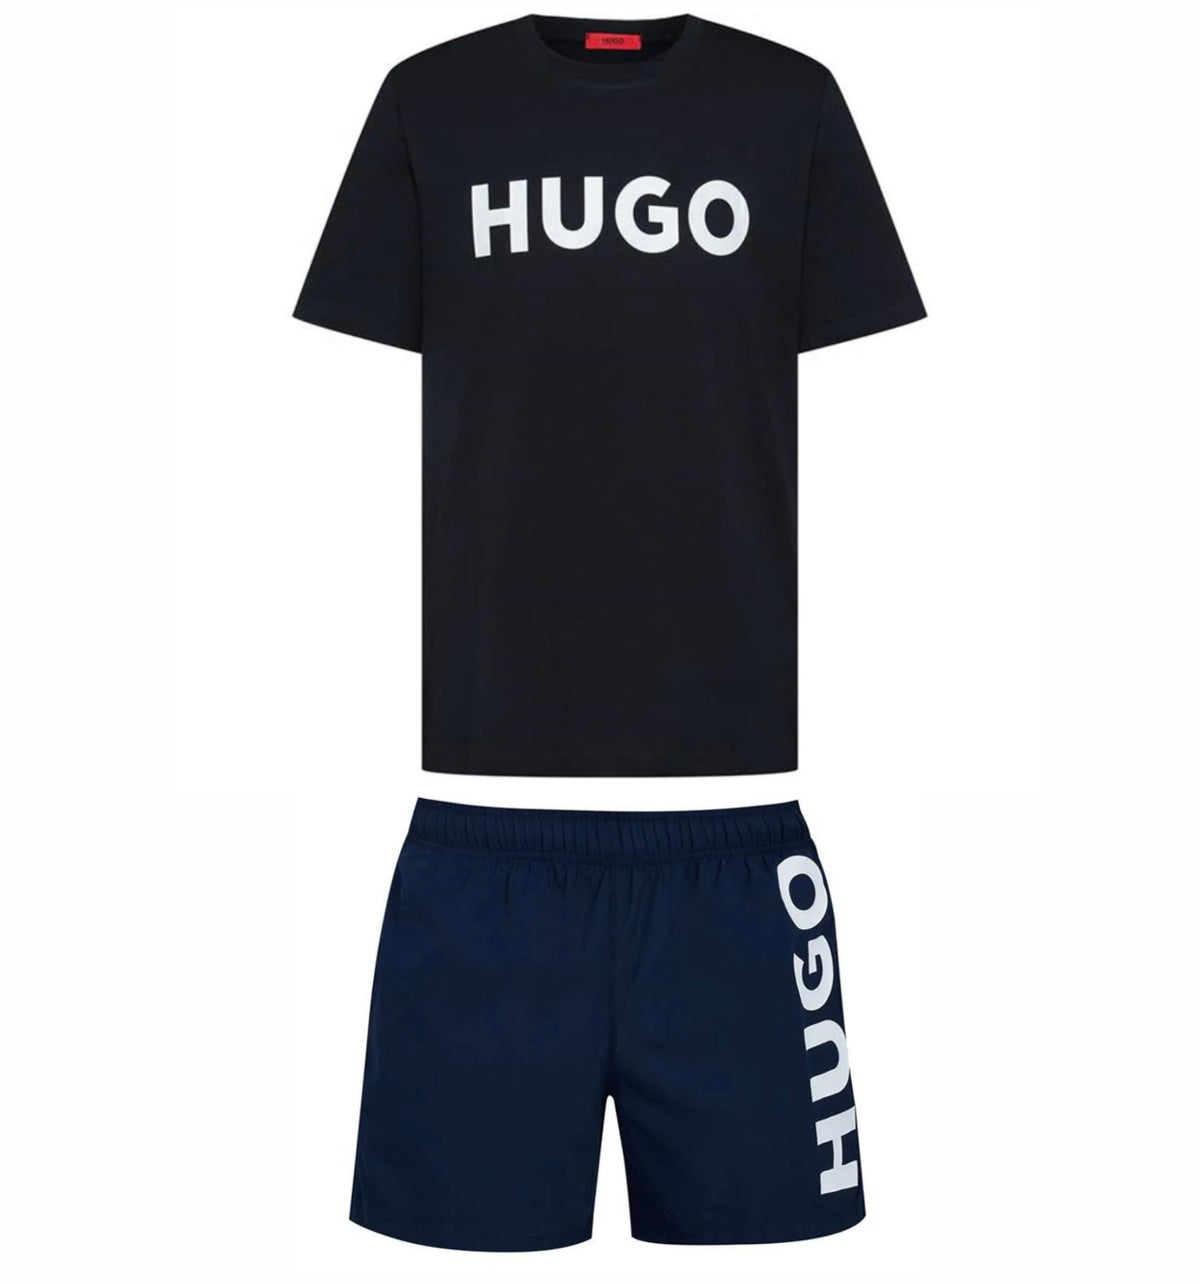 HUGO BOSS HUGO BIG LOGO T-SHIRT & SWIM SHORTS SET NAVY BLUE